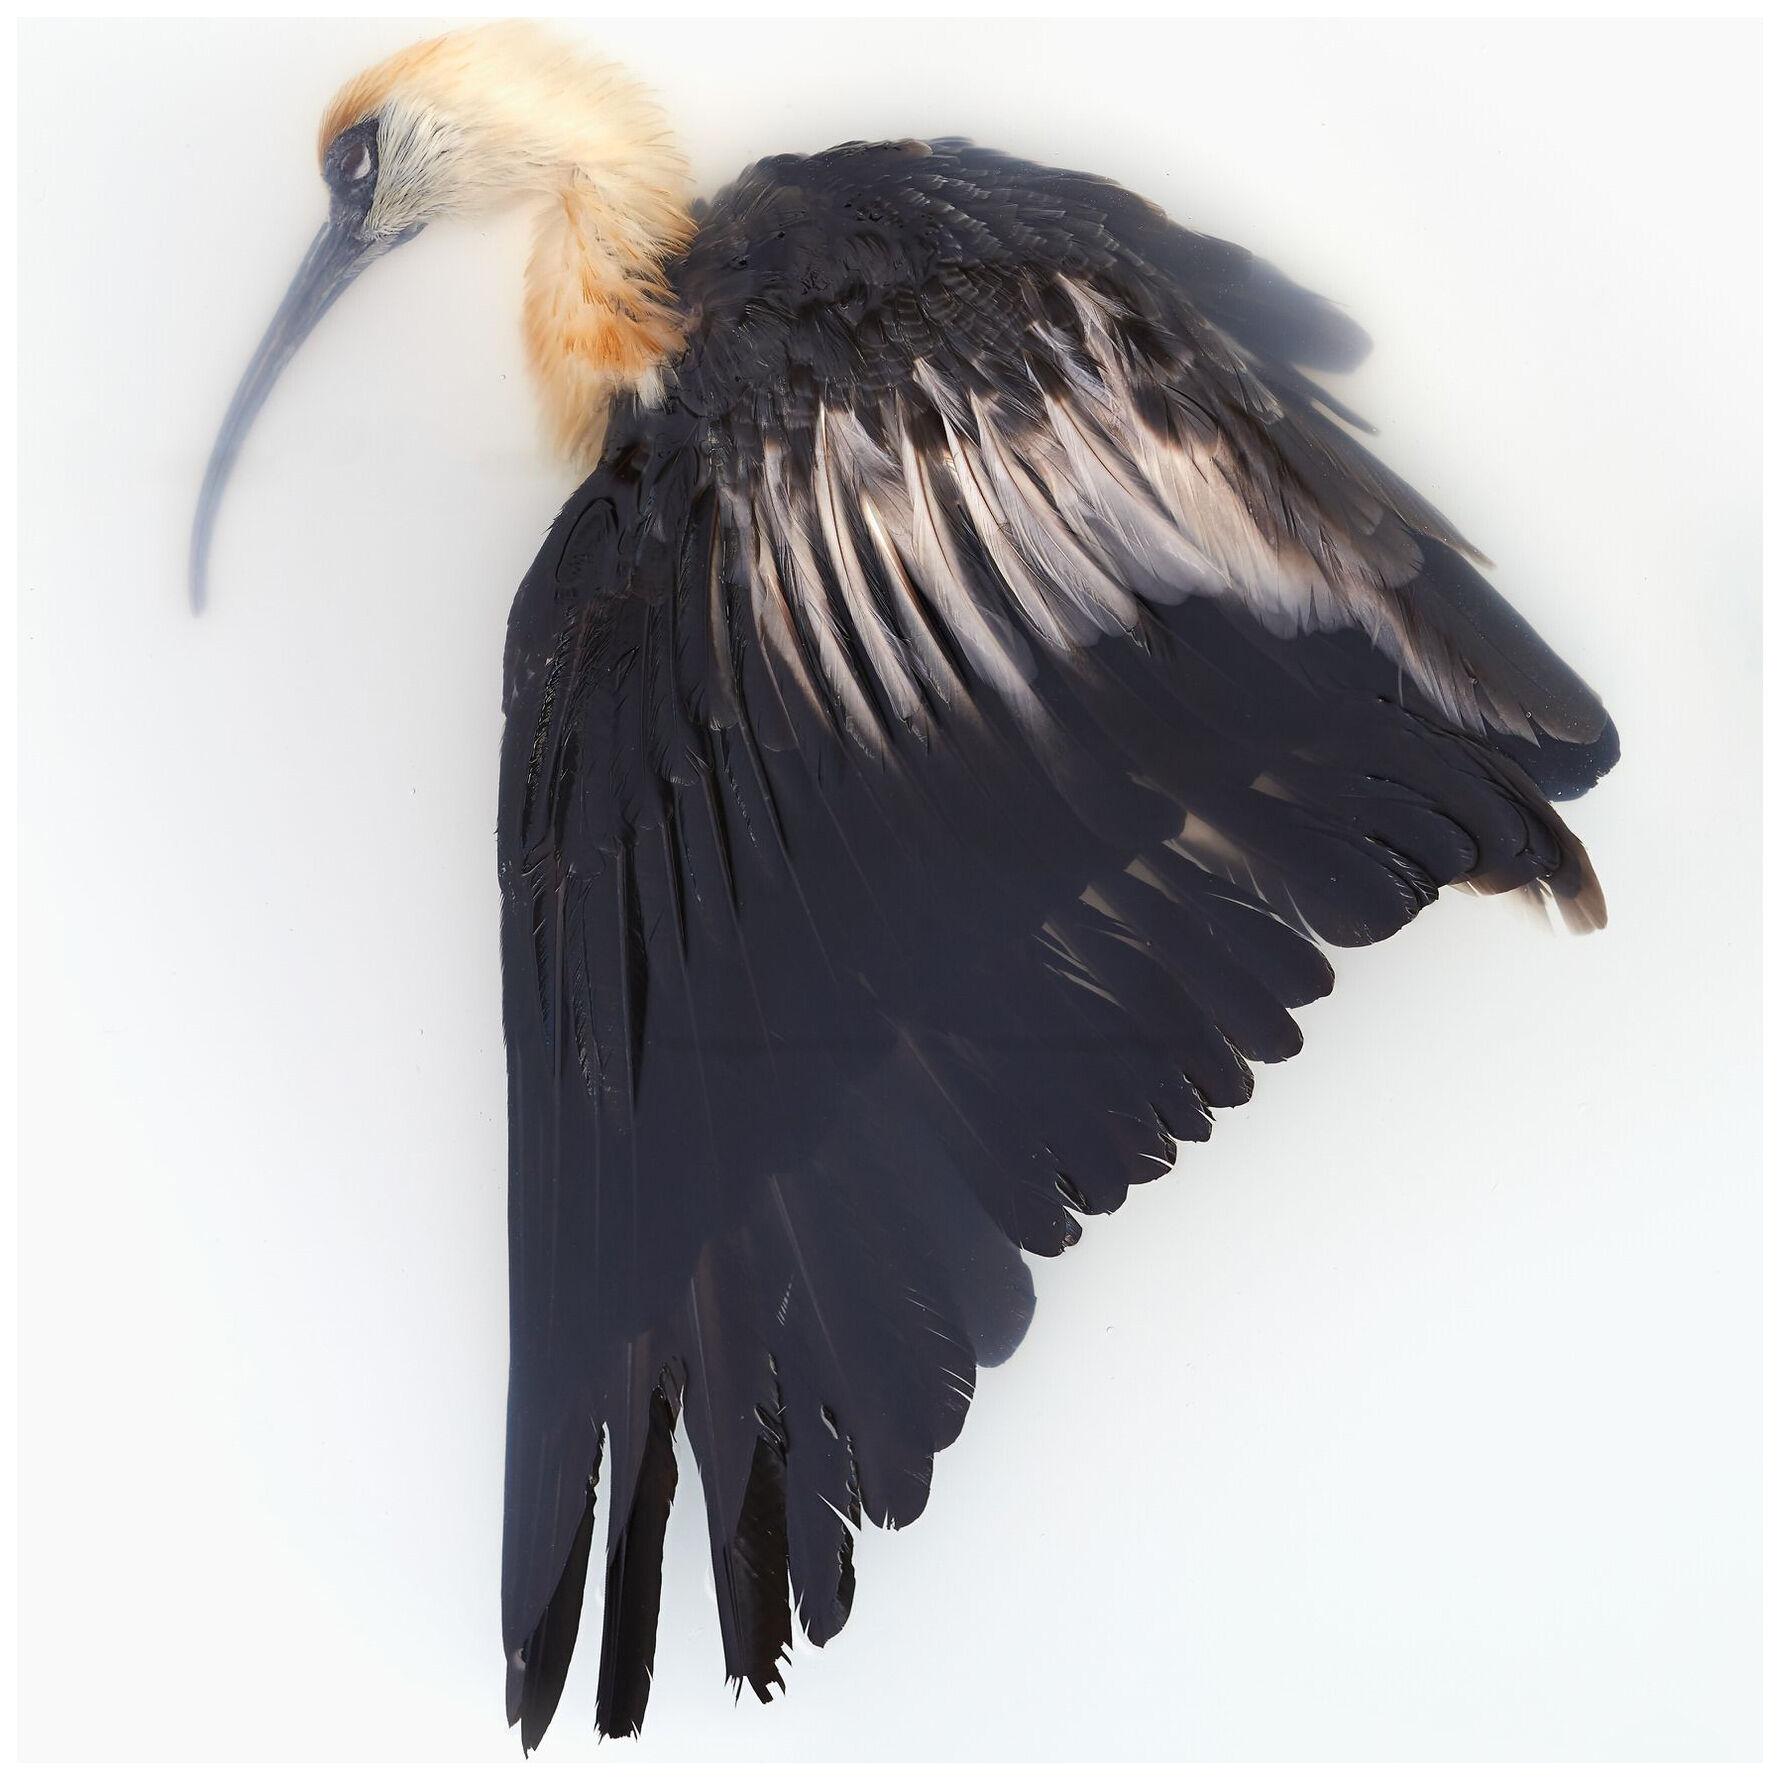 Art Print 'Unkown Pose by Black-Faced Ibis' by Sinke & Van Tongeren 113x90 cm